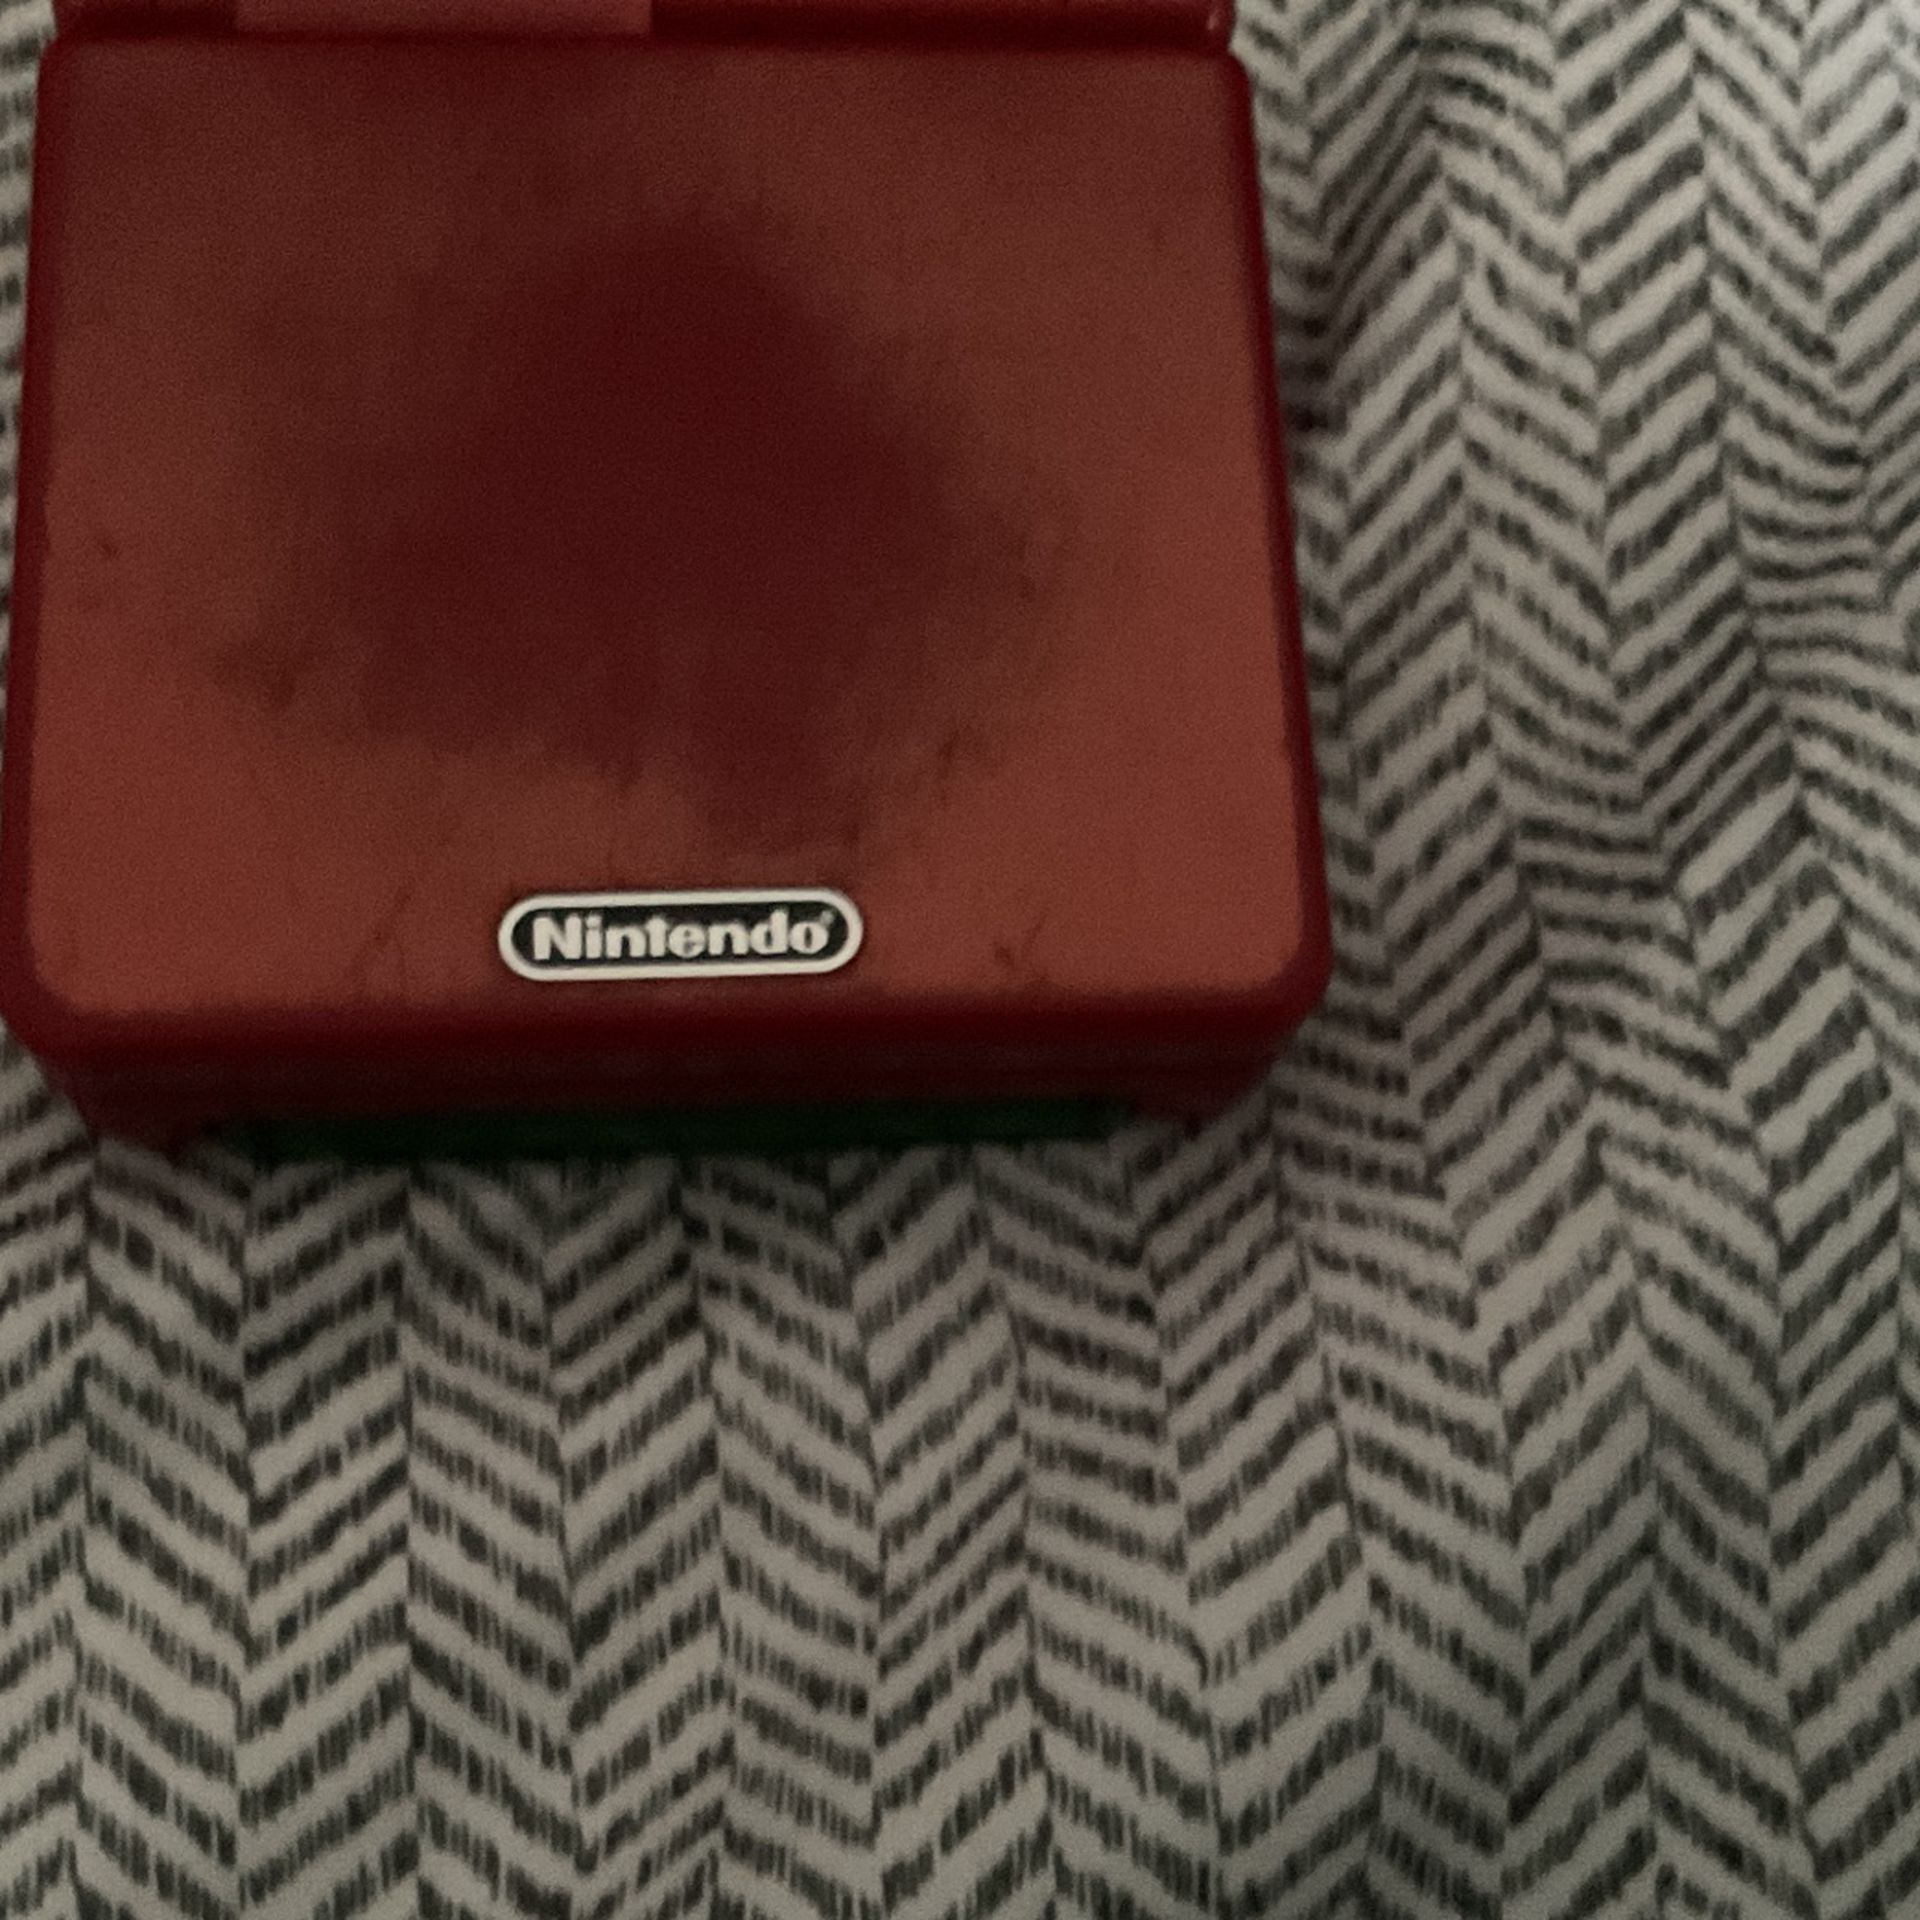 Game Boy Advance Sp dead no Charger